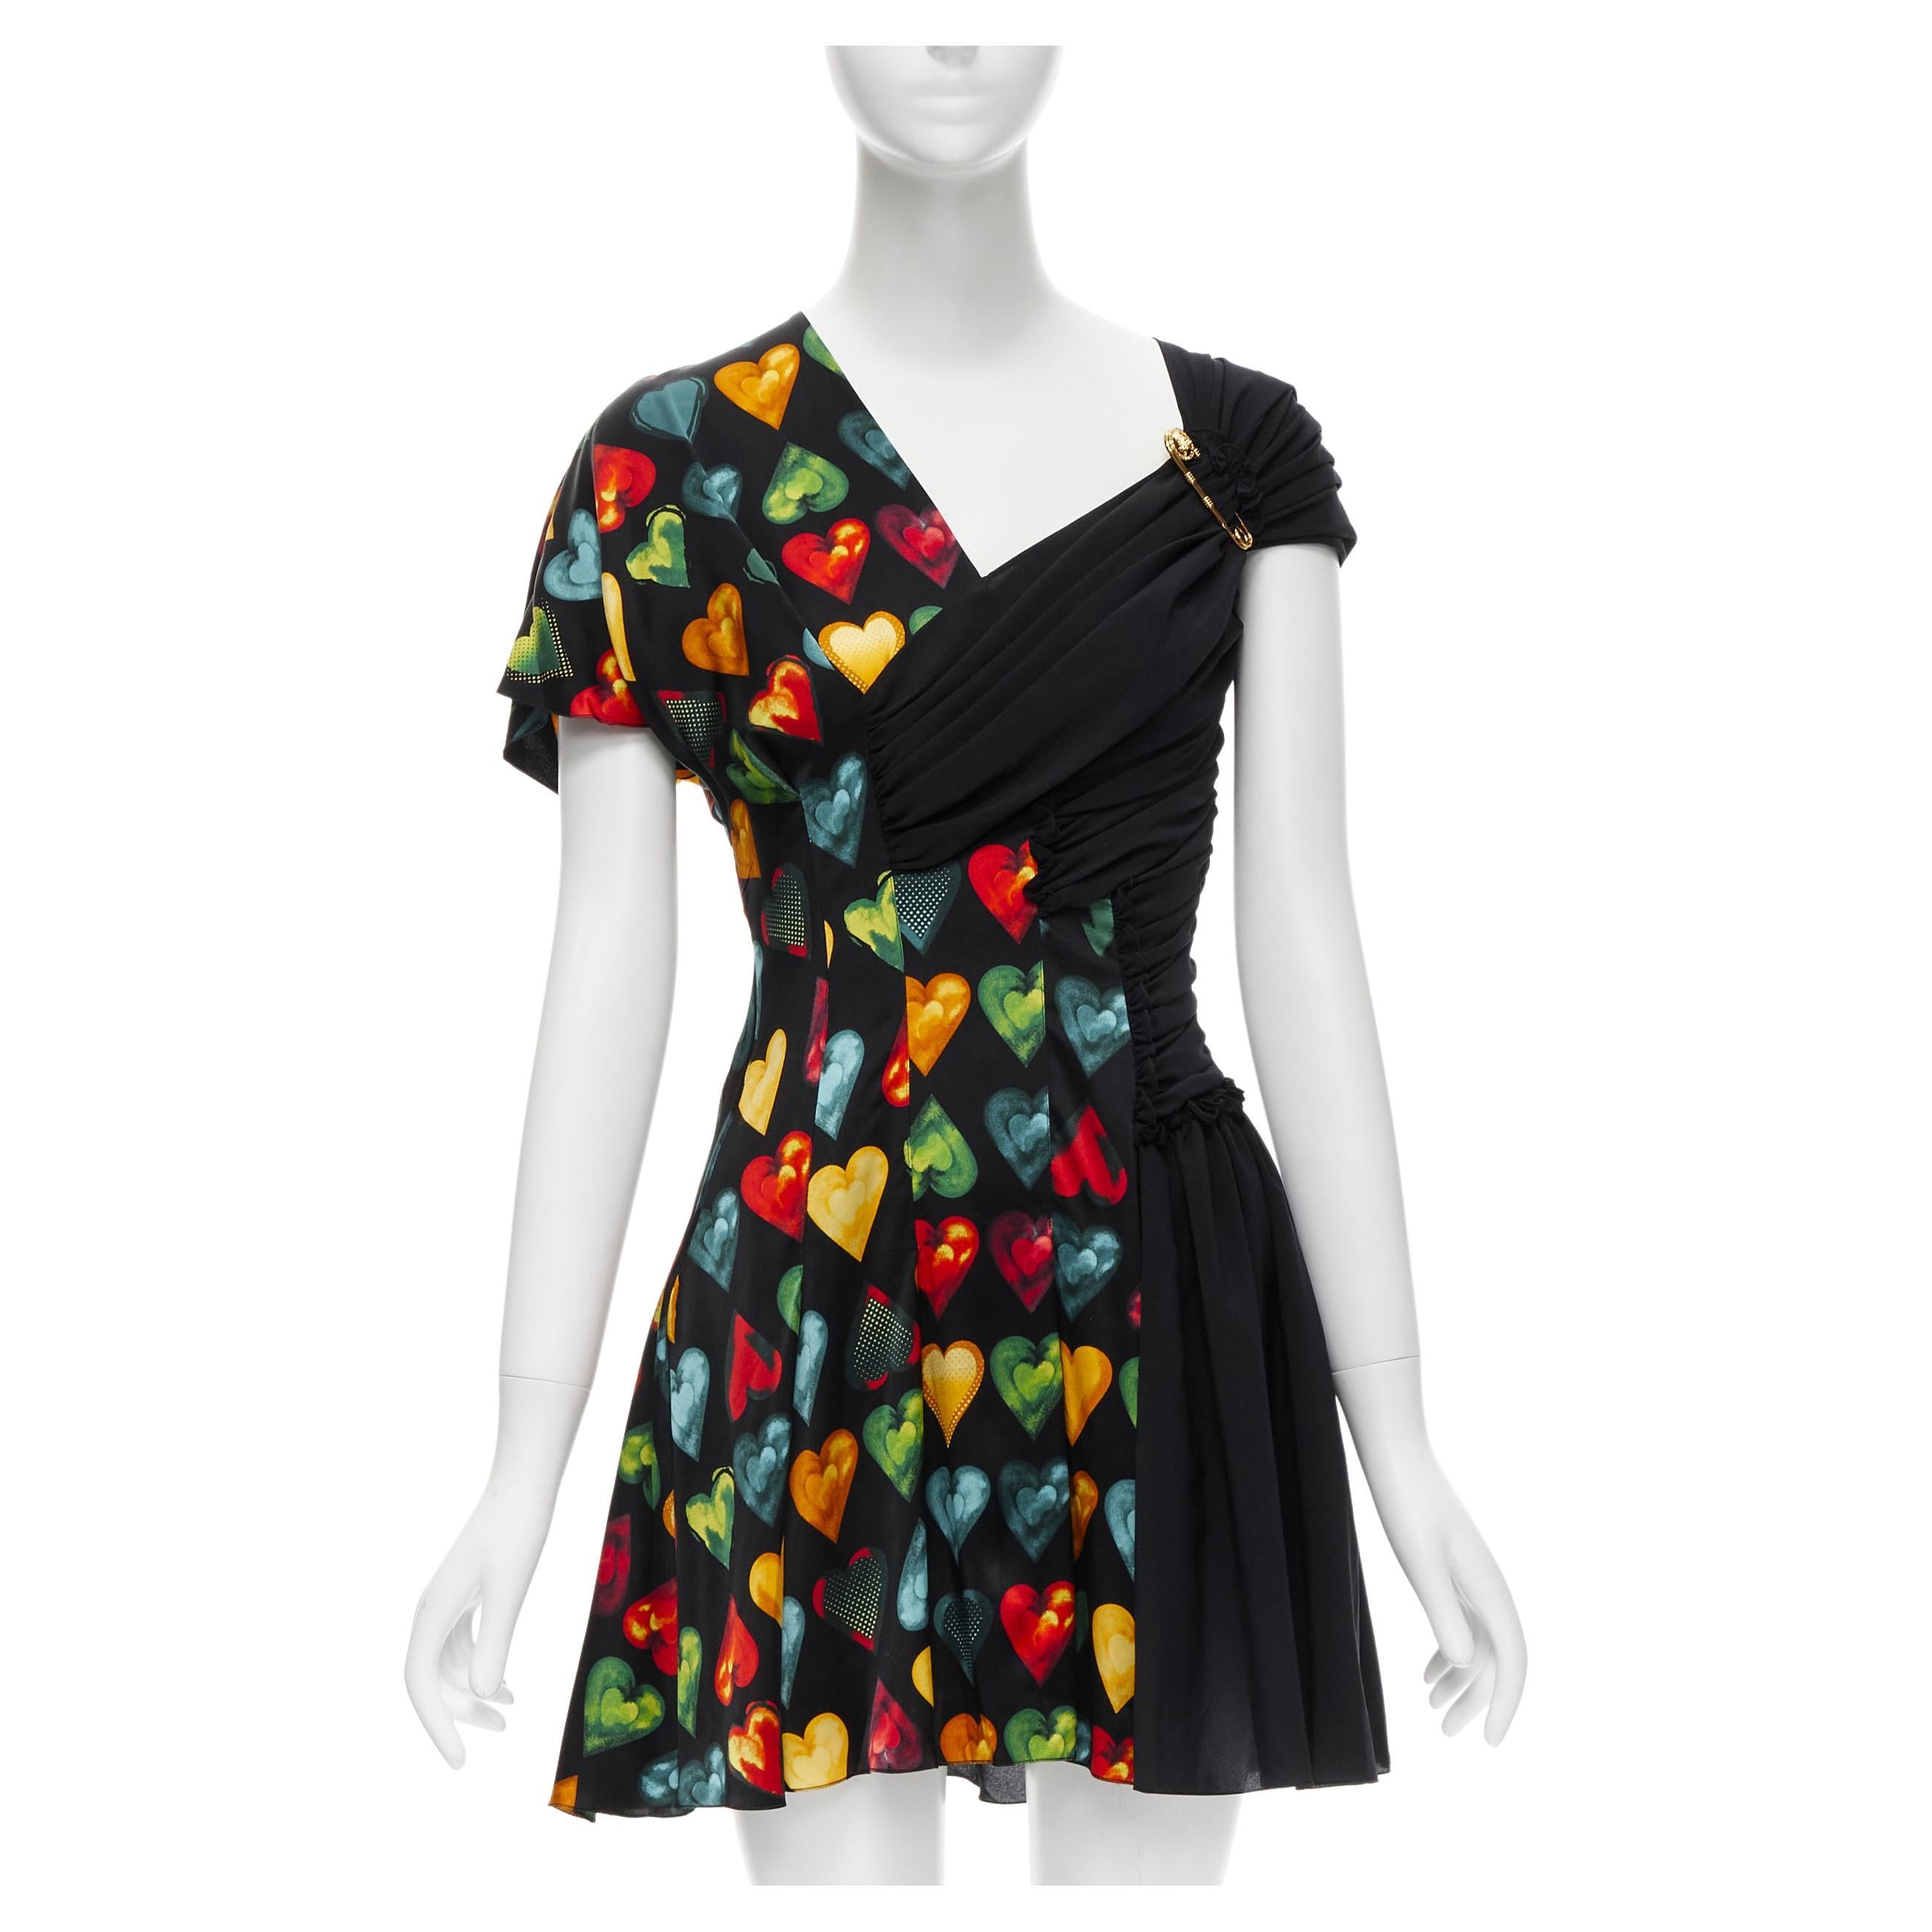 Who designed Elizabeth Hurley's safety pin dress?